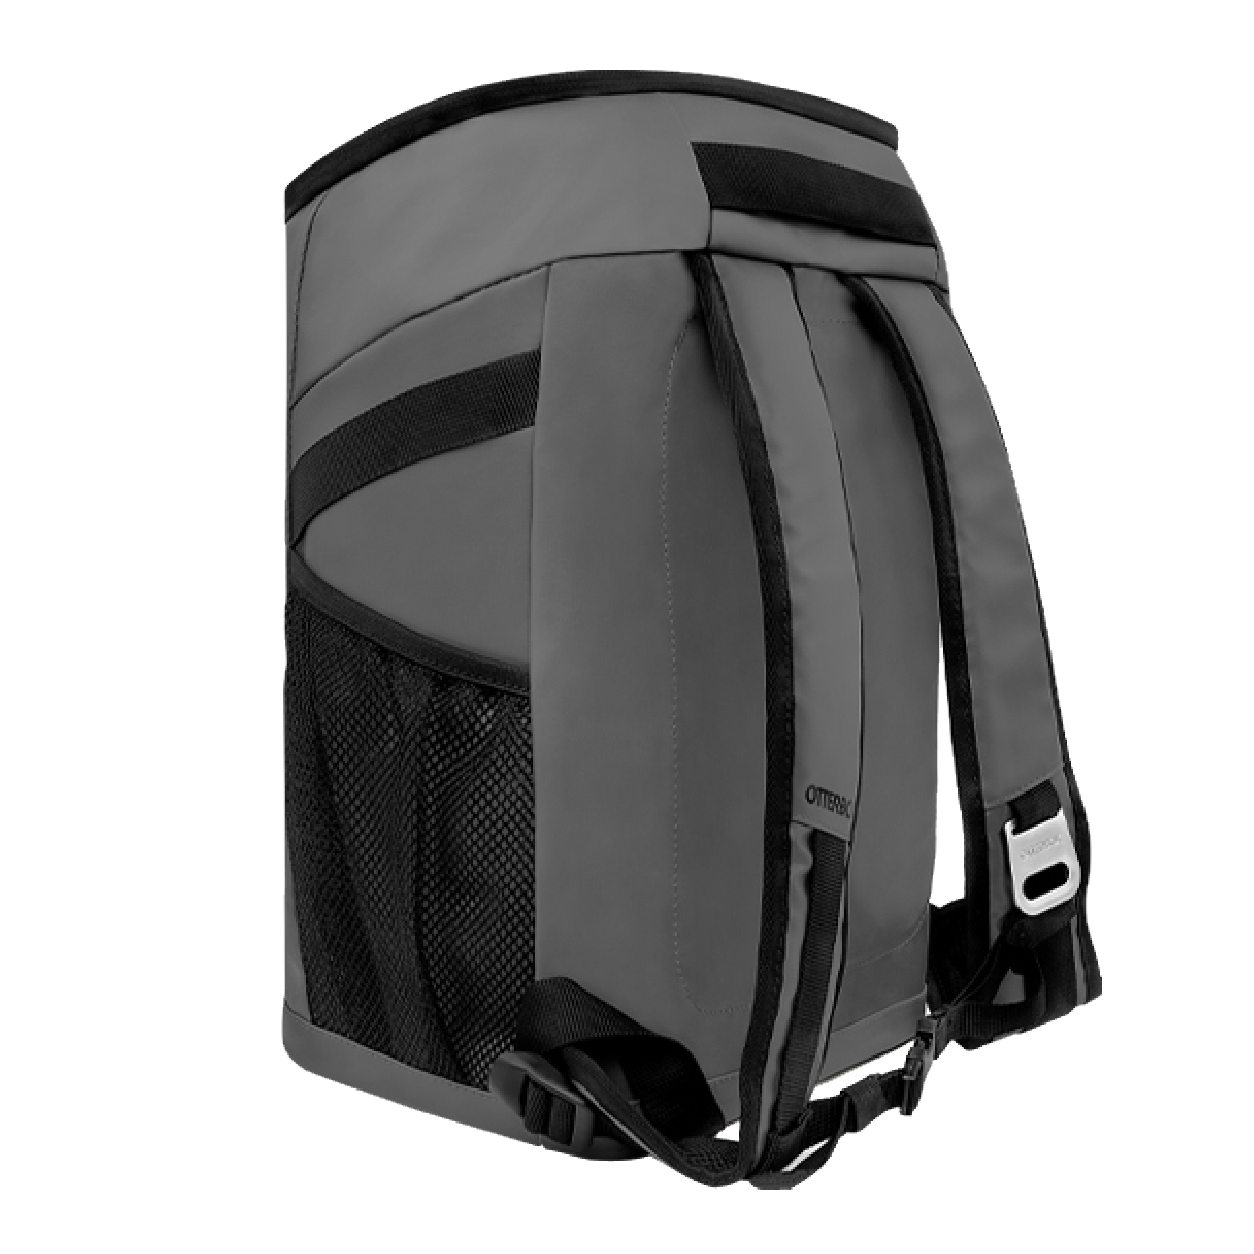 Otterbox® Backpack Cooler